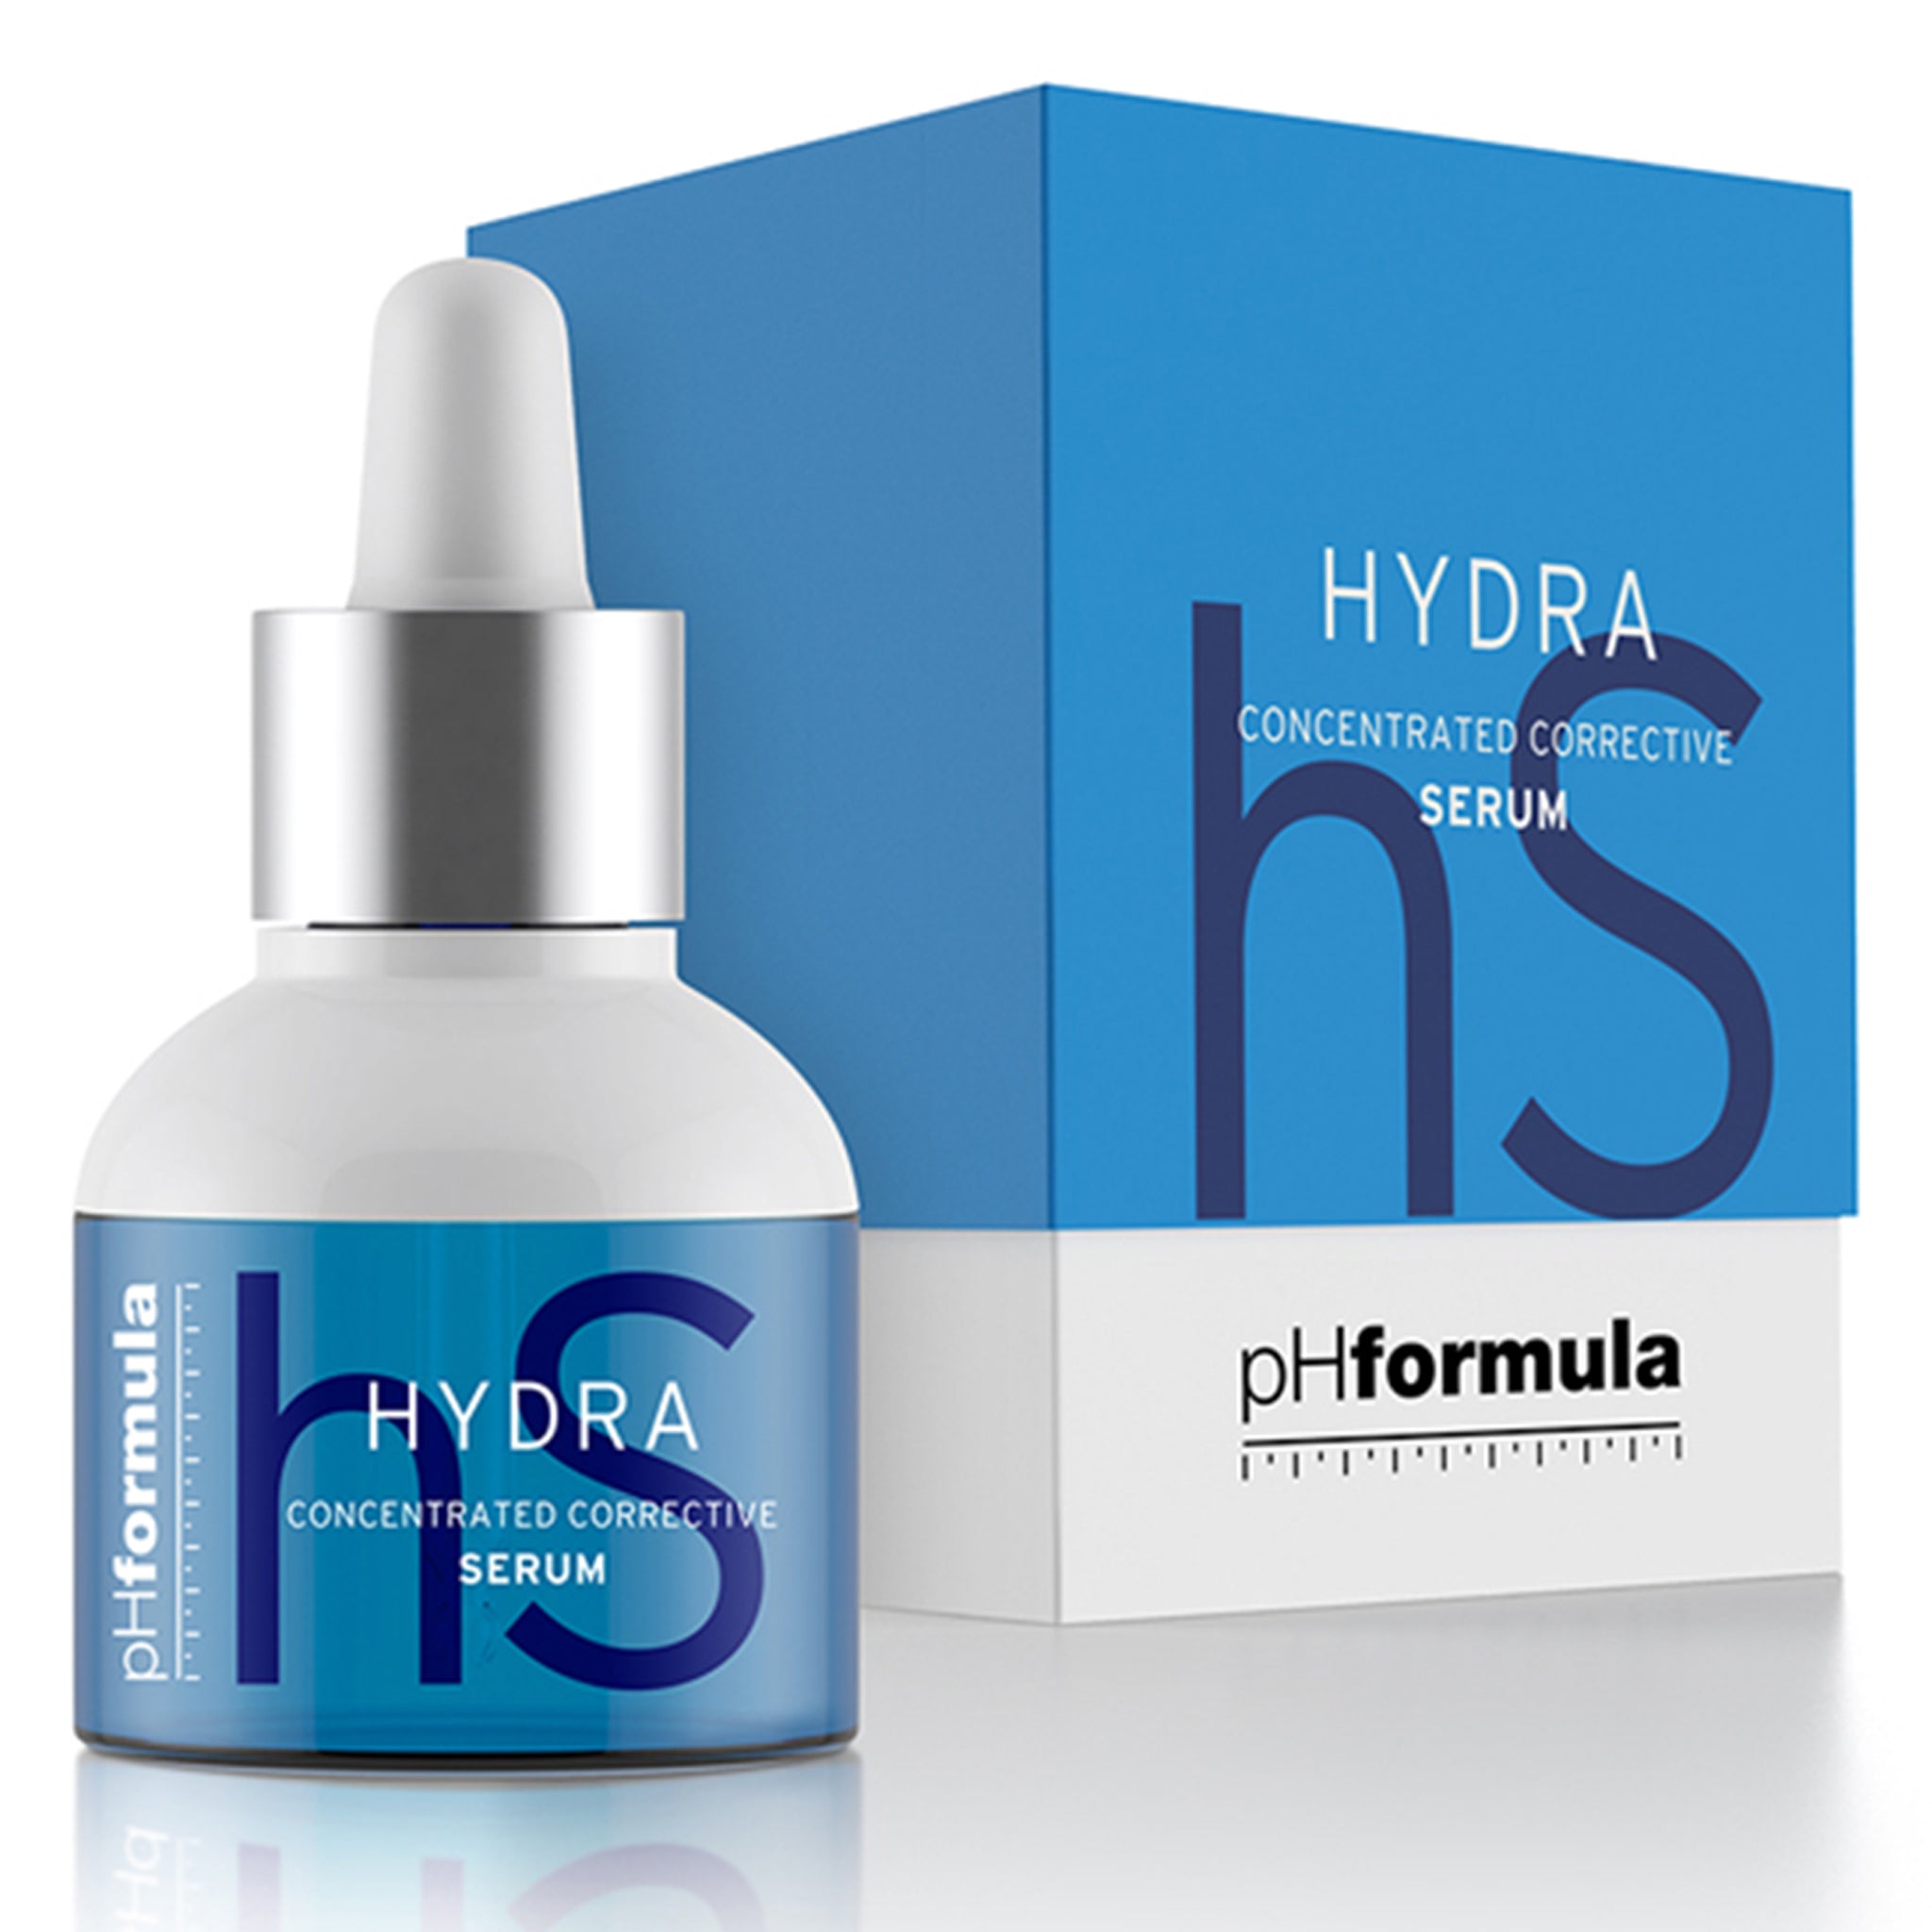 pHformula HYDRA Concentrated Corrective Serum | Holistic Beauty